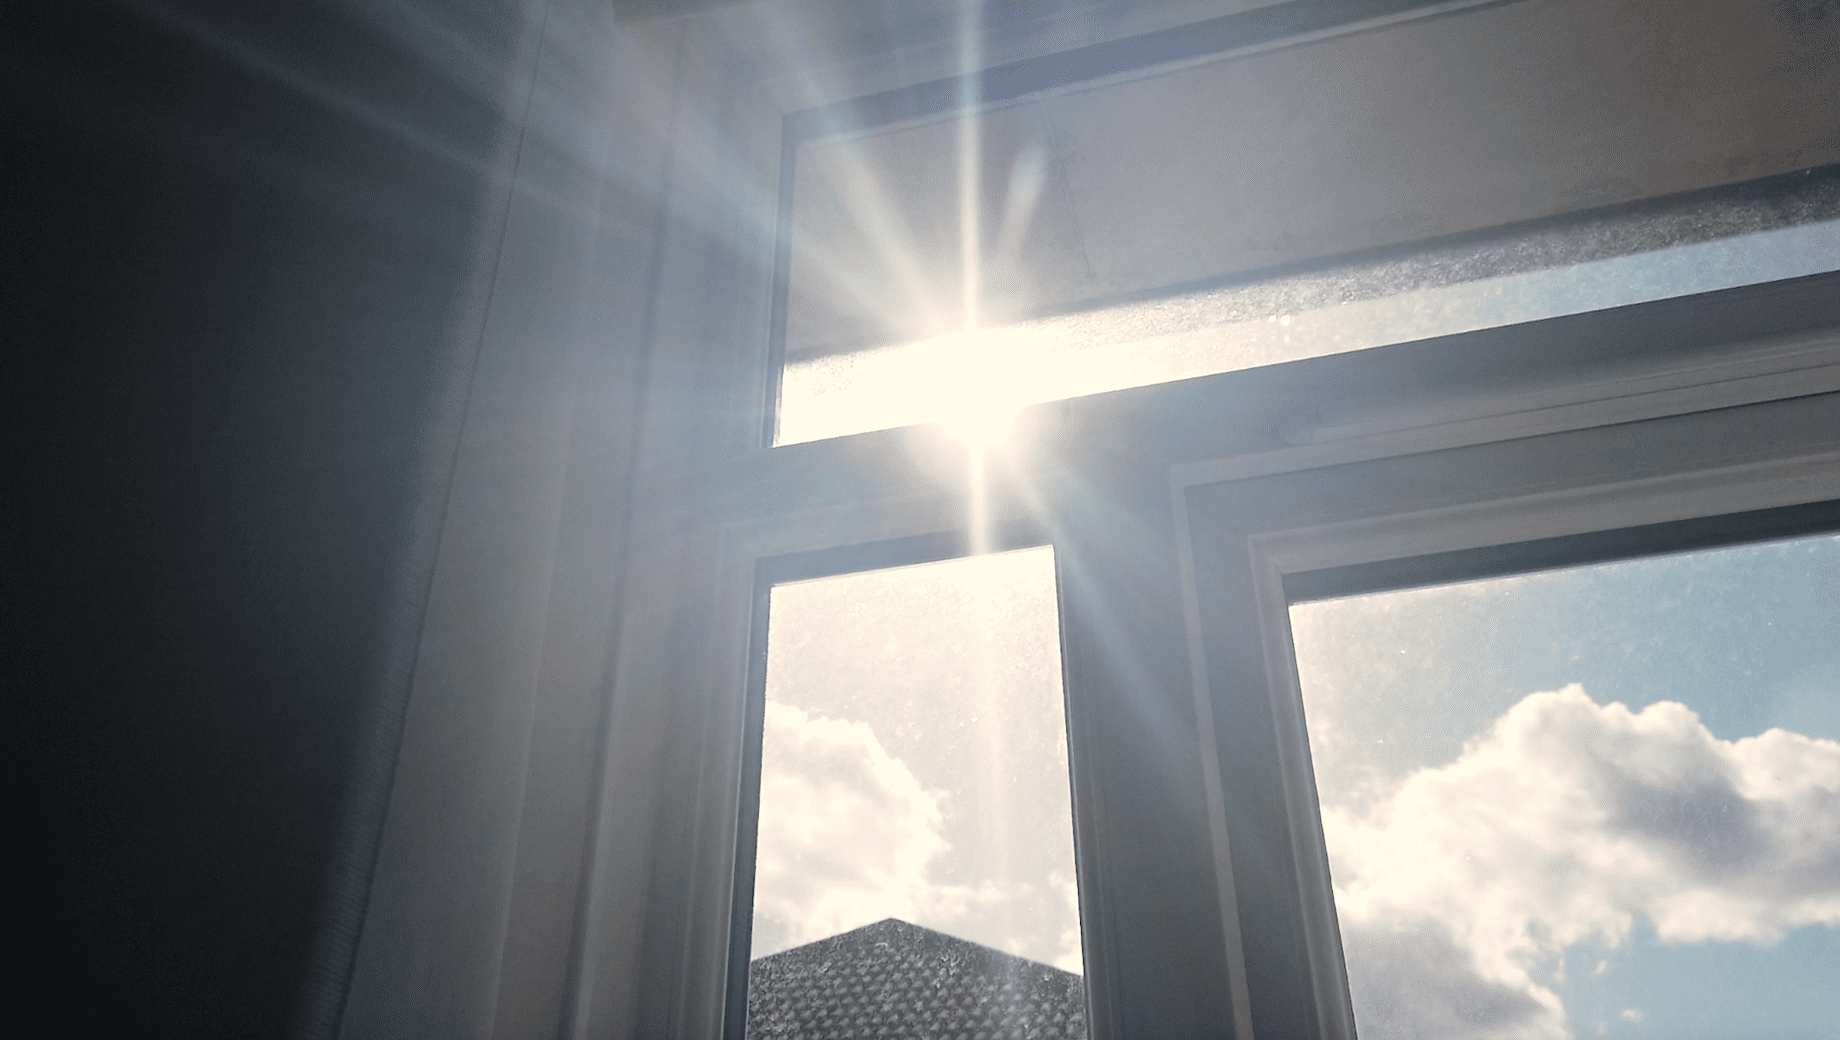 Sun peering through the window